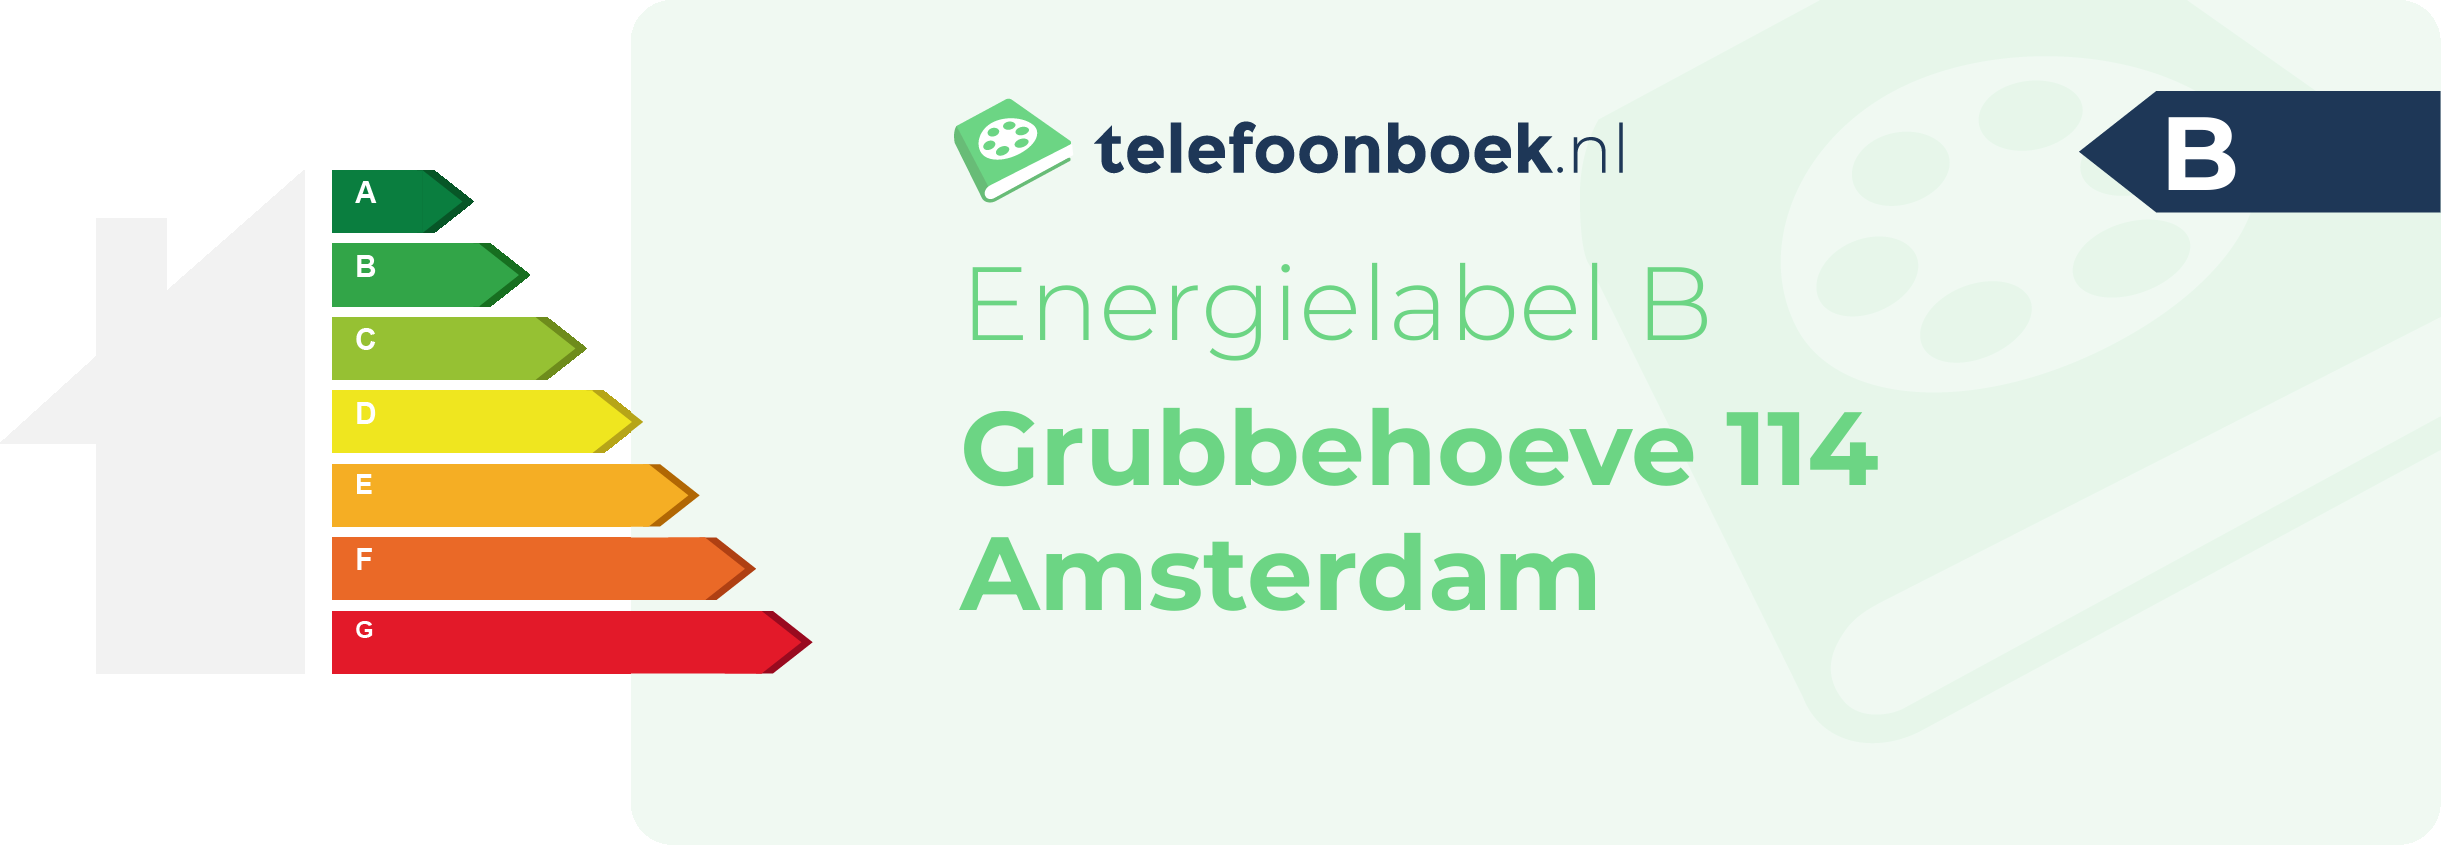 Energielabel Grubbehoeve 114 Amsterdam